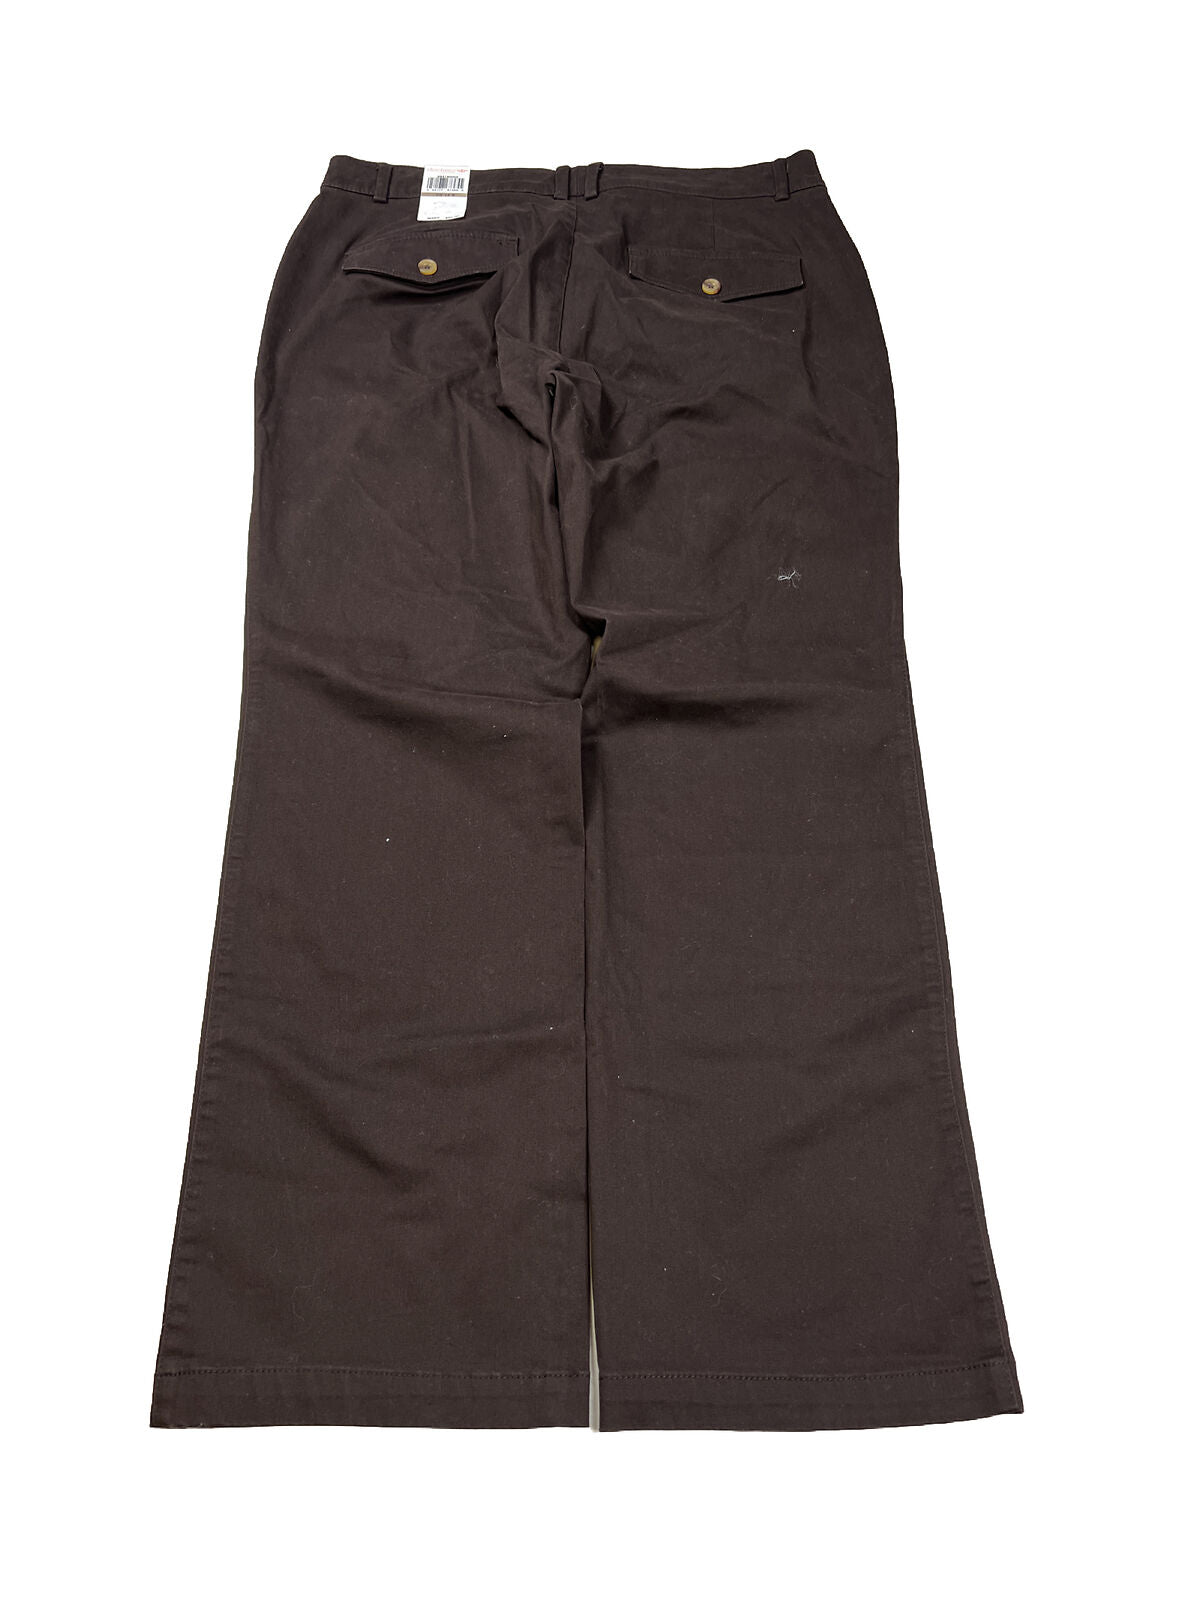 NEW Dockers Womens' Brown Straight Leg khaki Pants - 12 Short